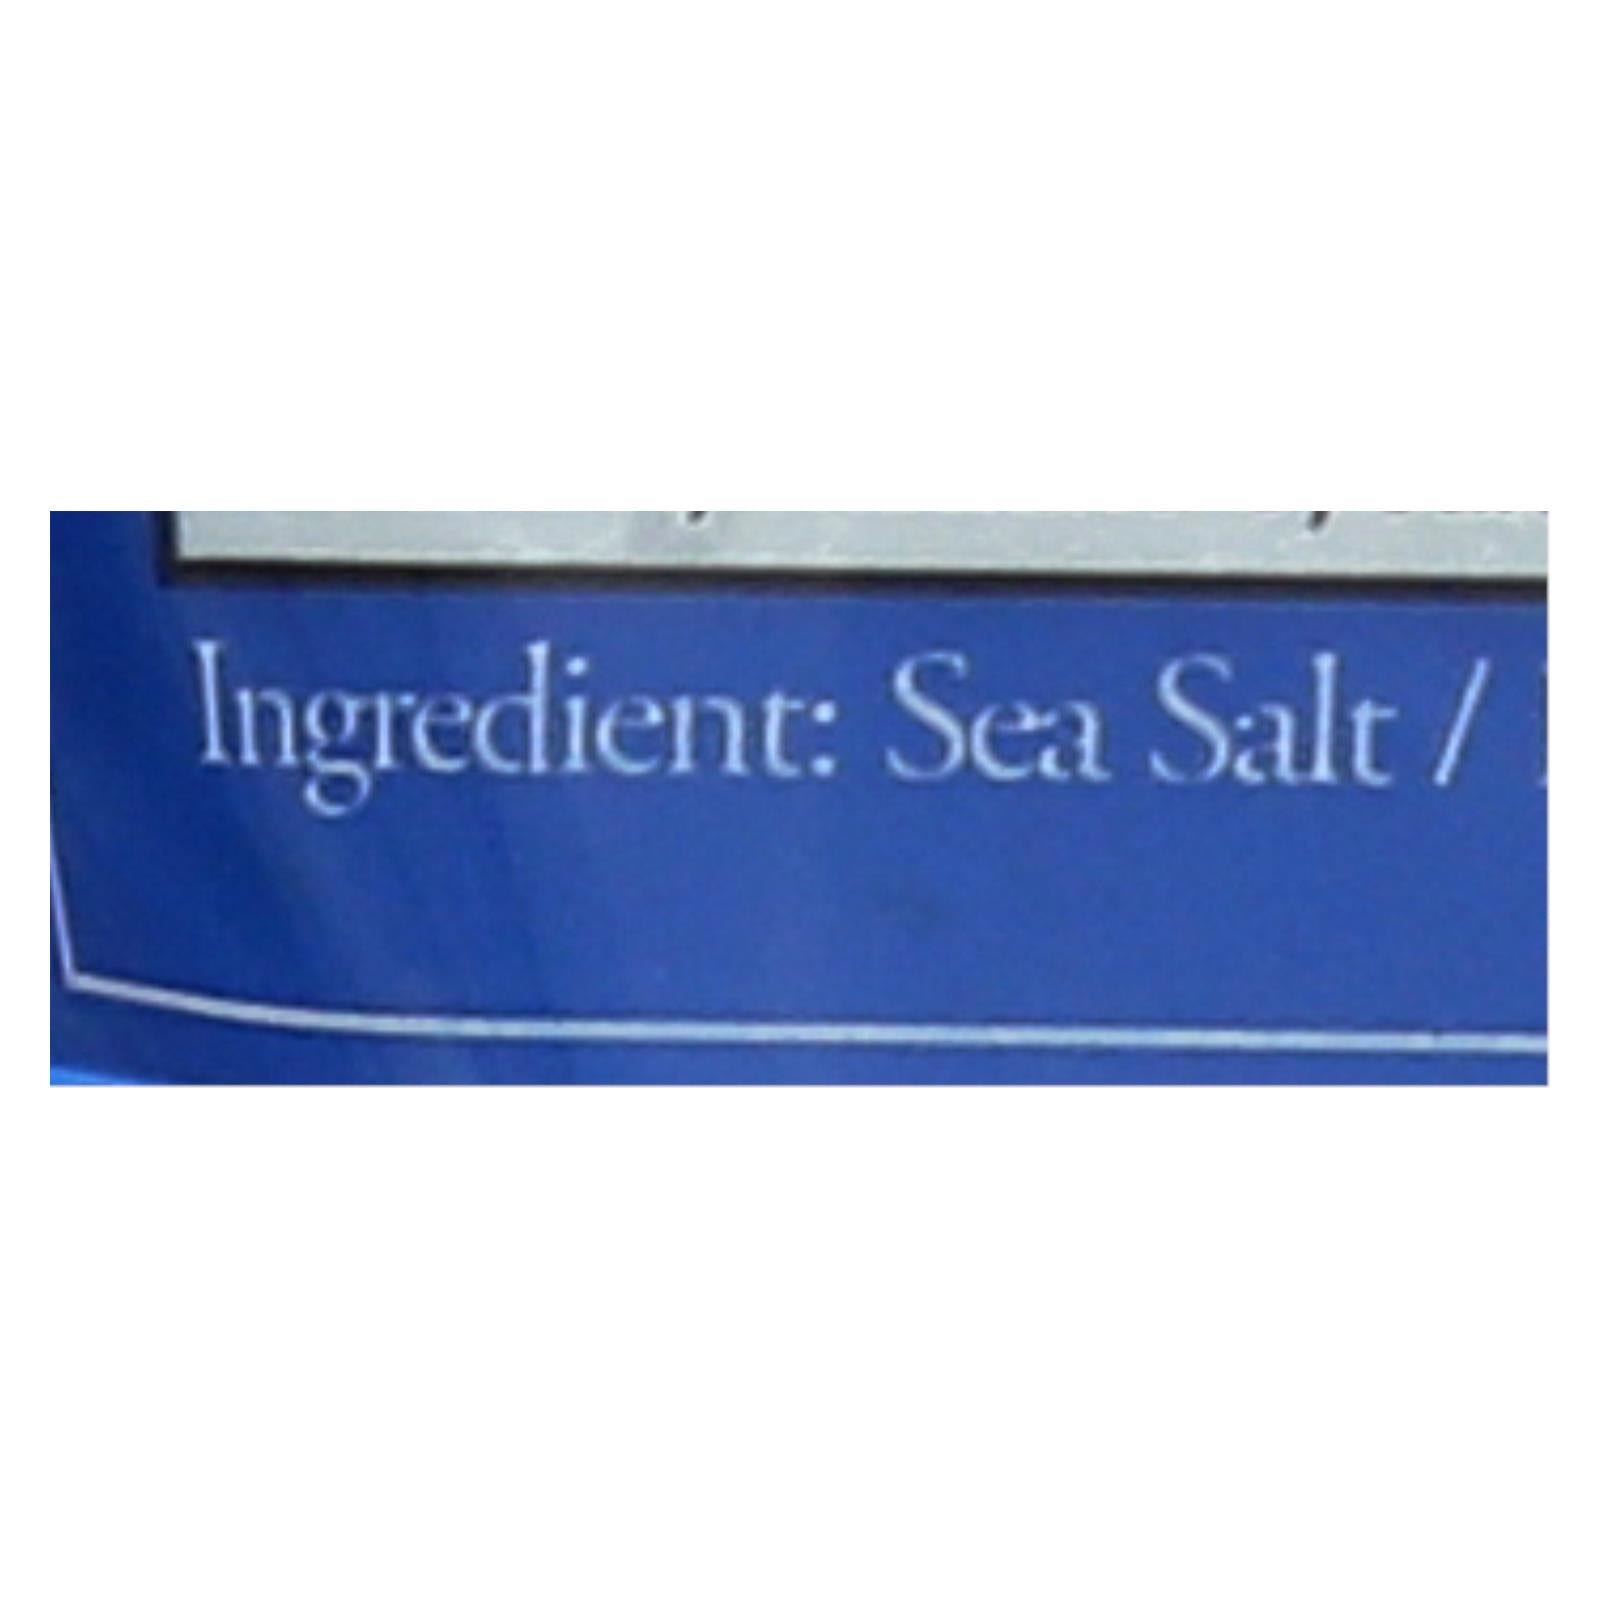 Celtic Sea Salt Reseal Bag - Light Grey - Case of 6 lbs